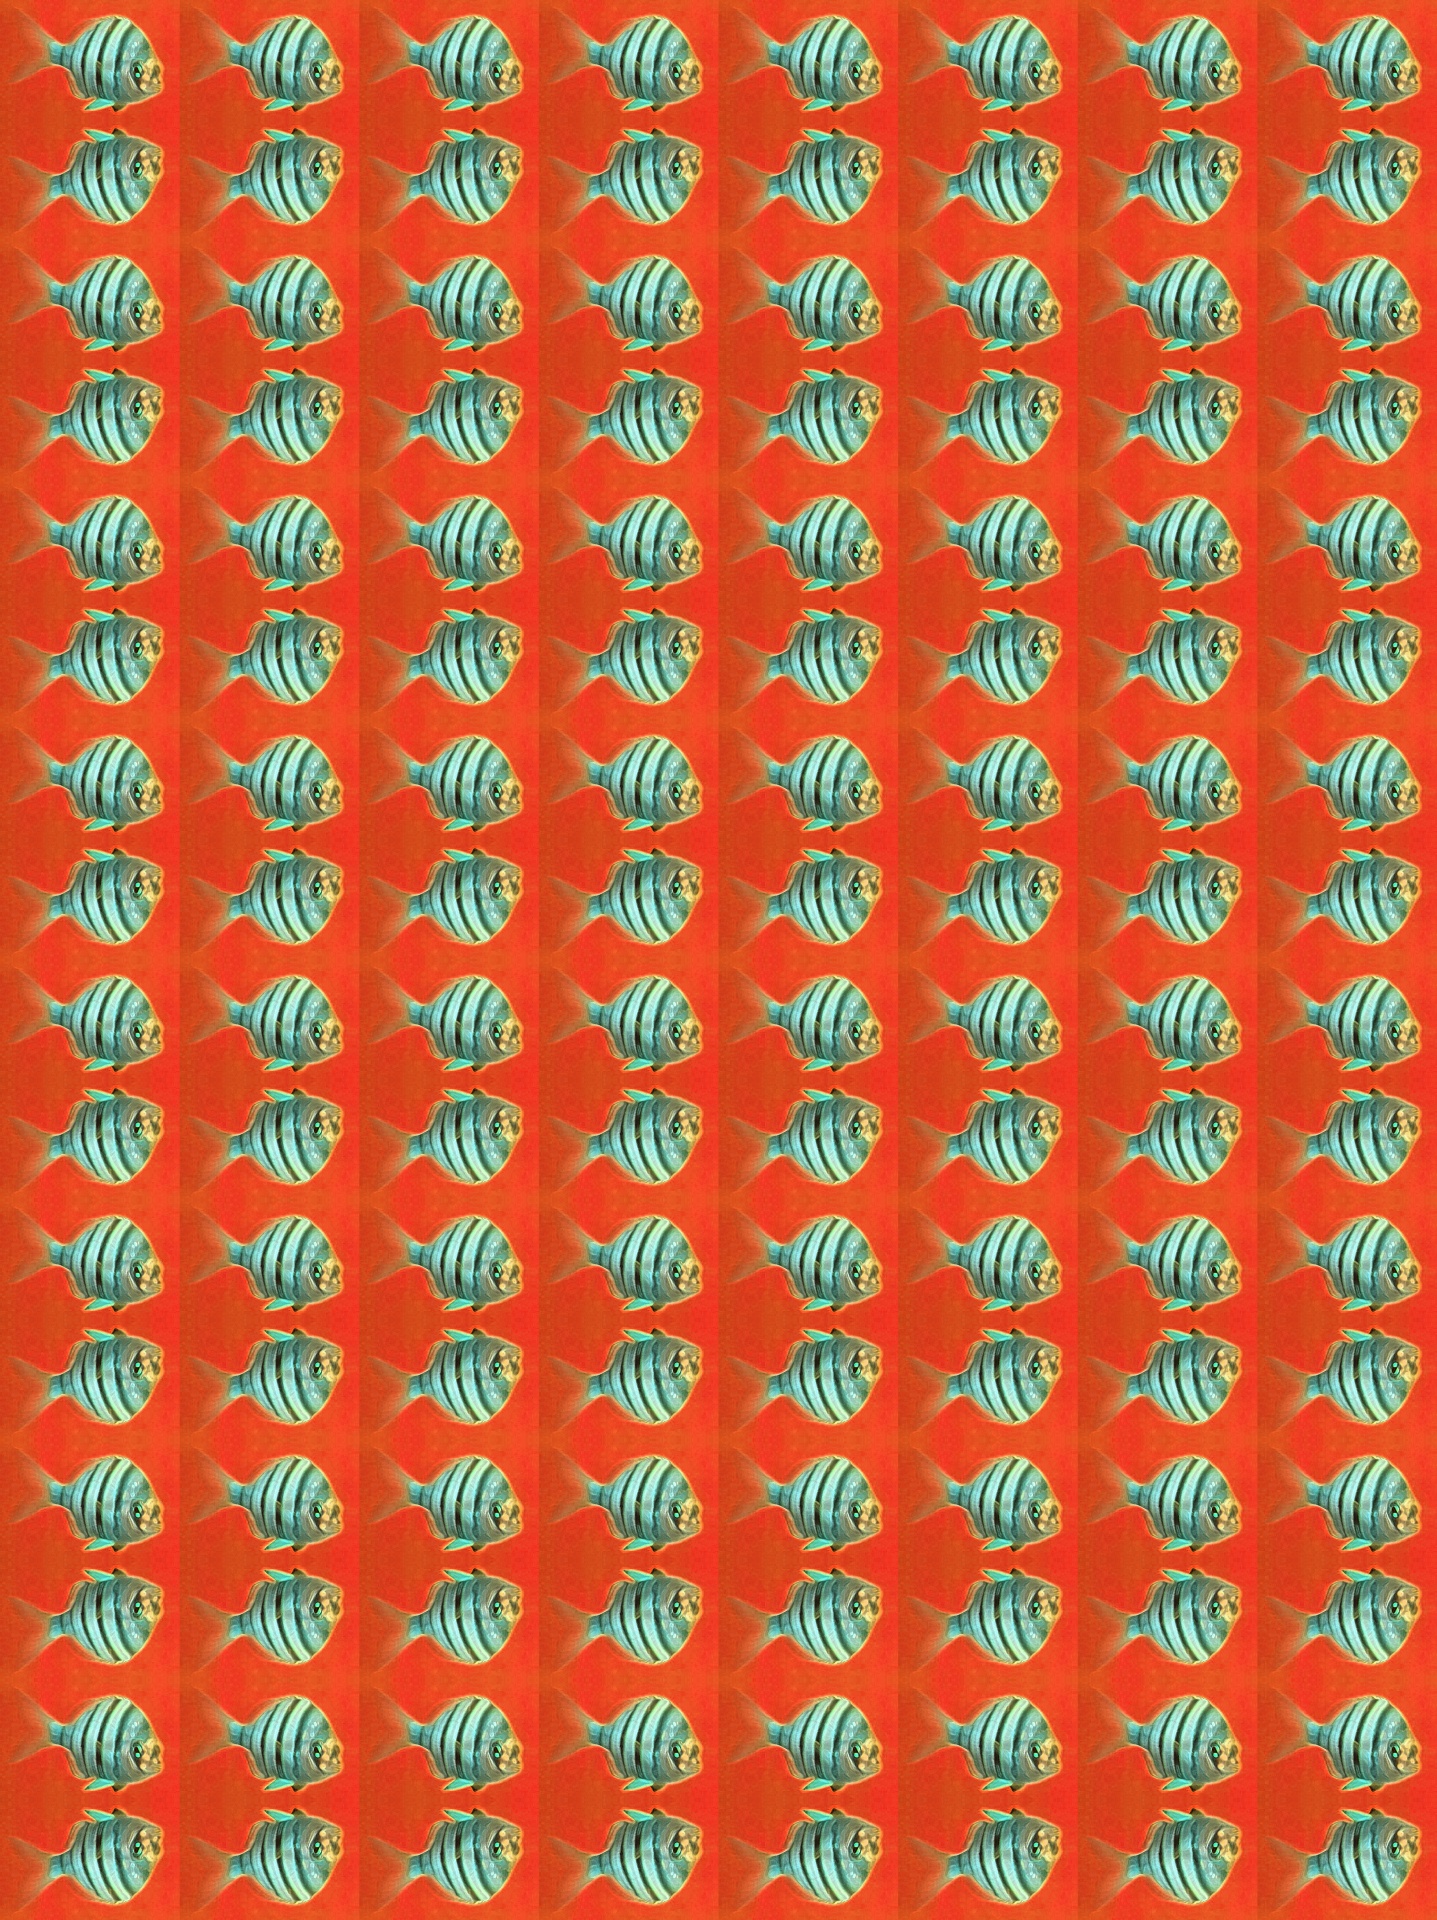 fish pattern repeat free photo